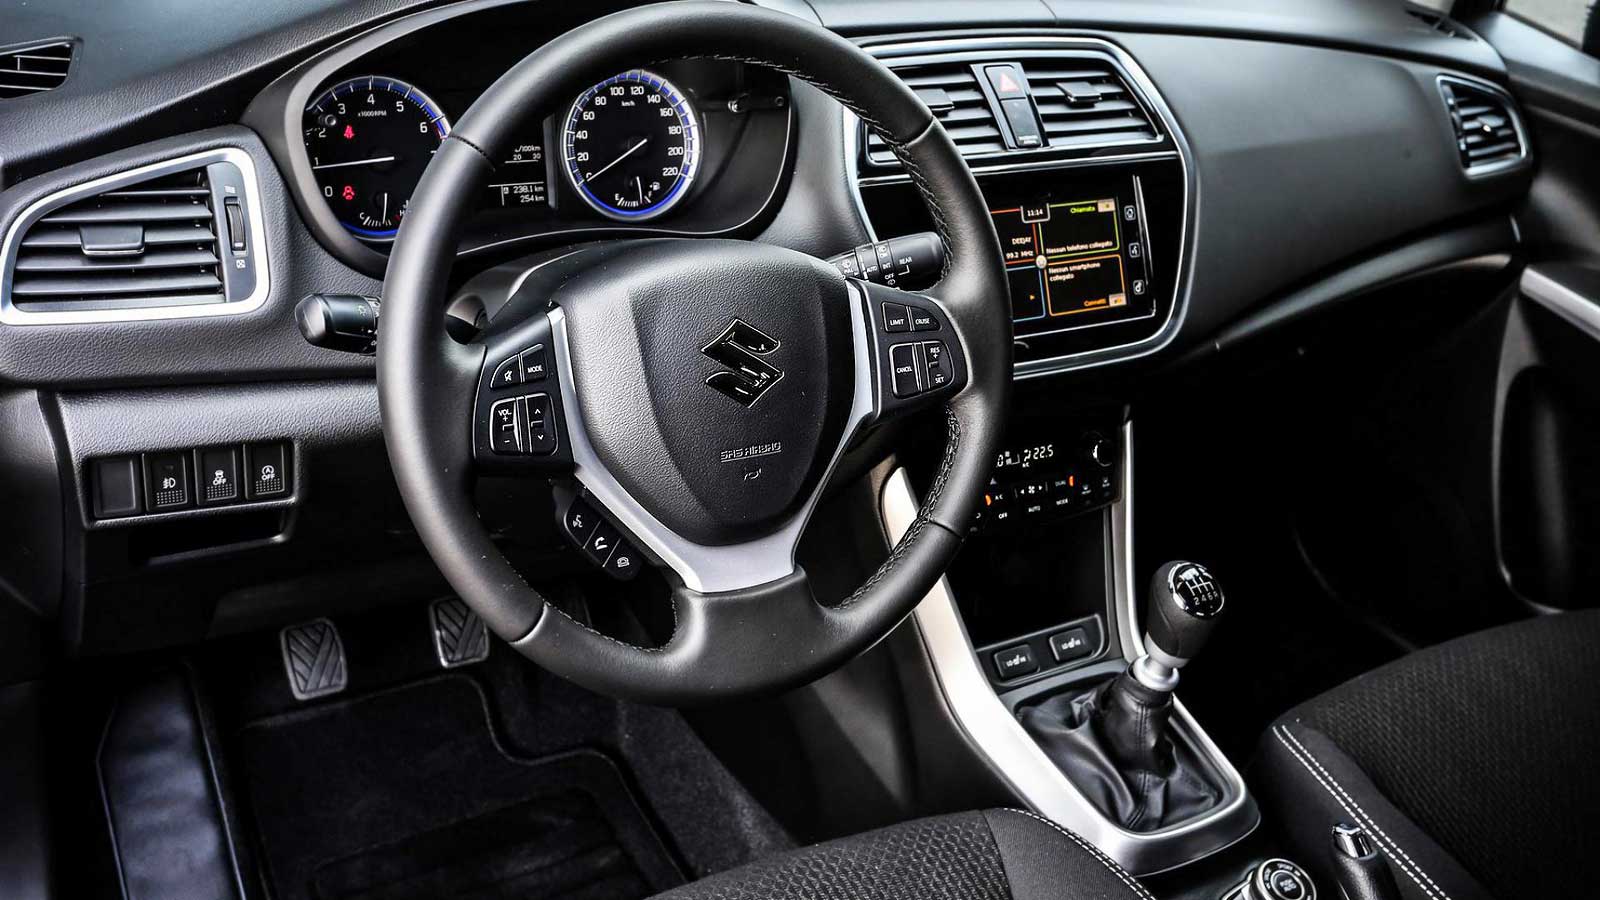 Interior New Suzuki  SX4 S  Cross  baru 2021 AutonetMagz 